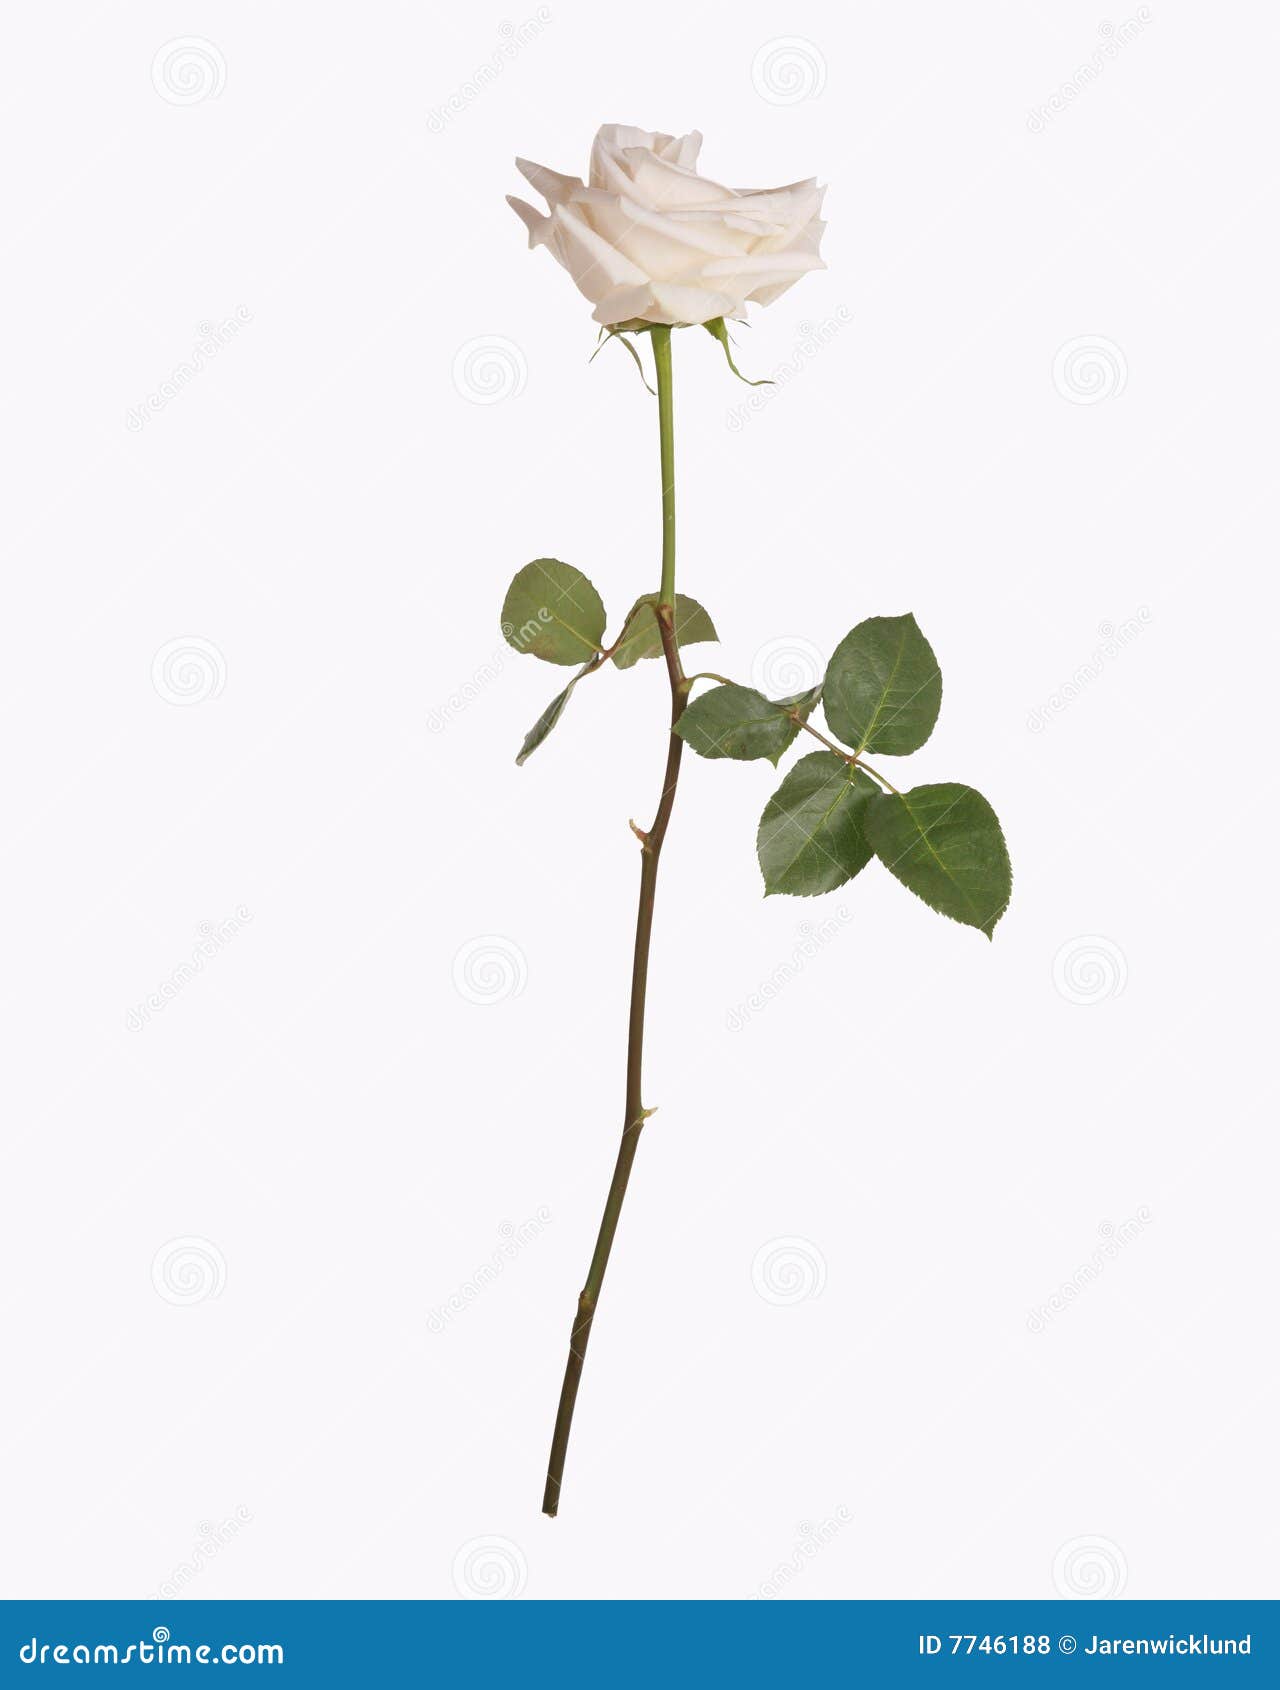 White Rose With Stem